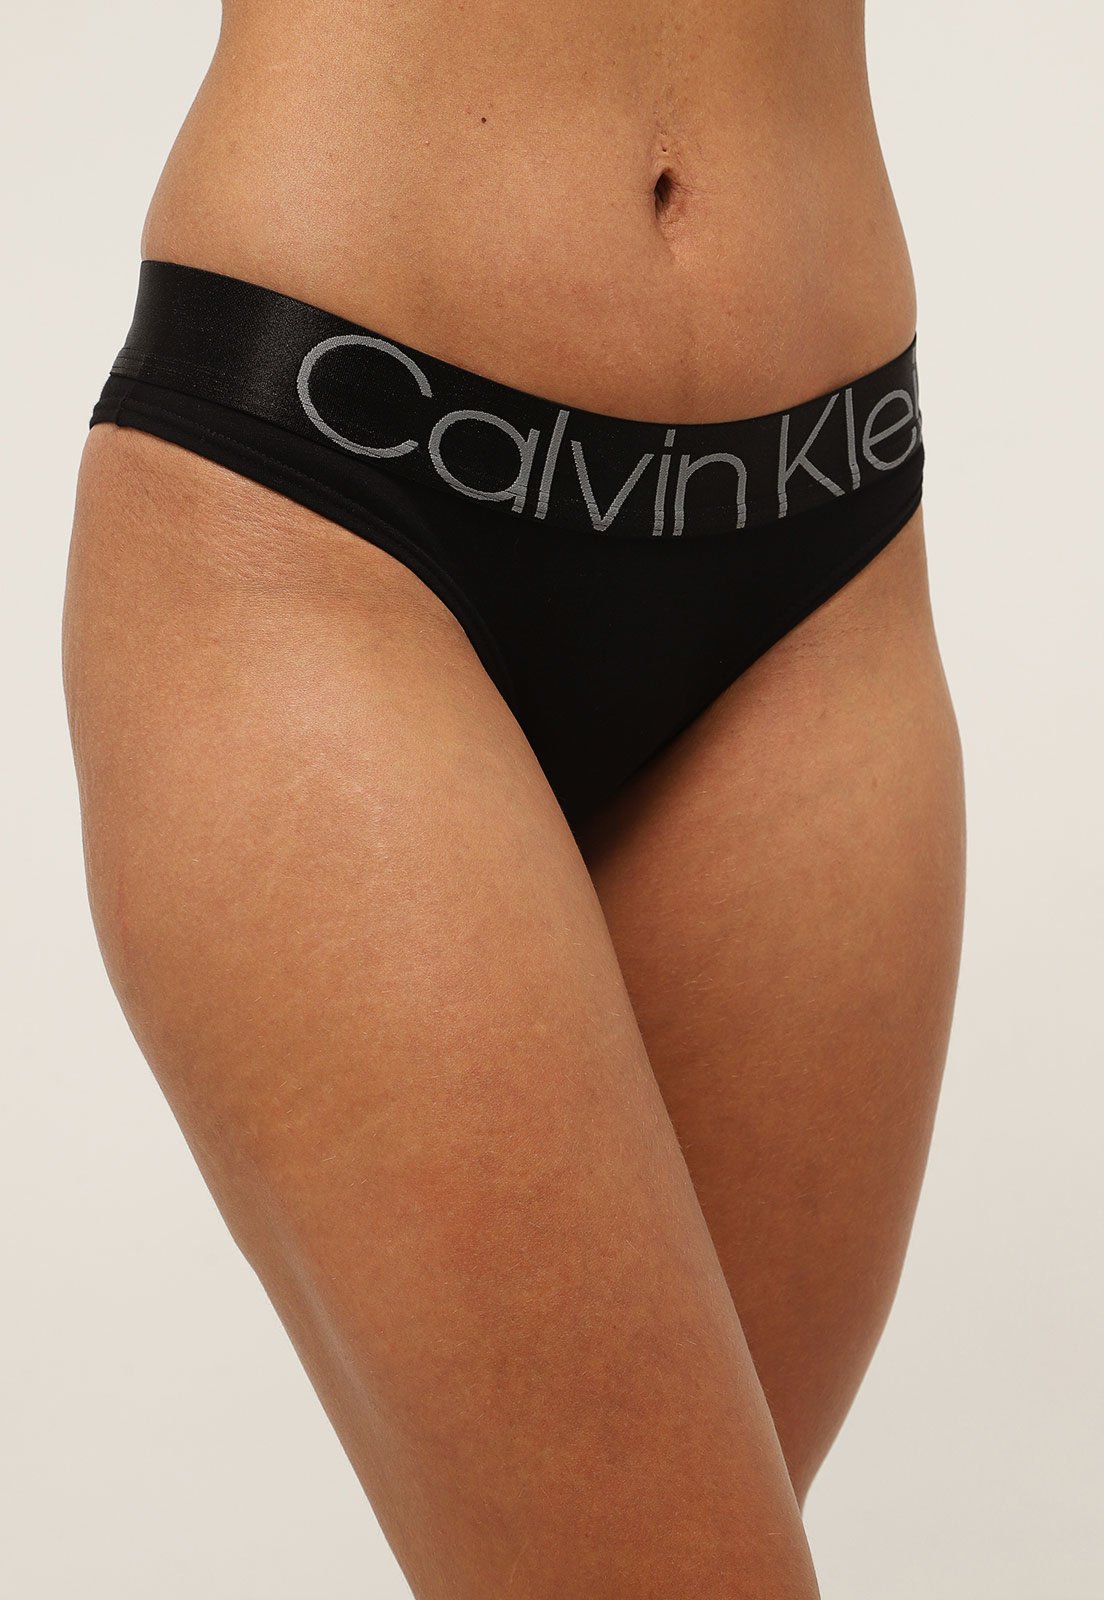 Calcinha Tanga Black Lace - Calvin Klein Underwear - Preto - Shop2gether